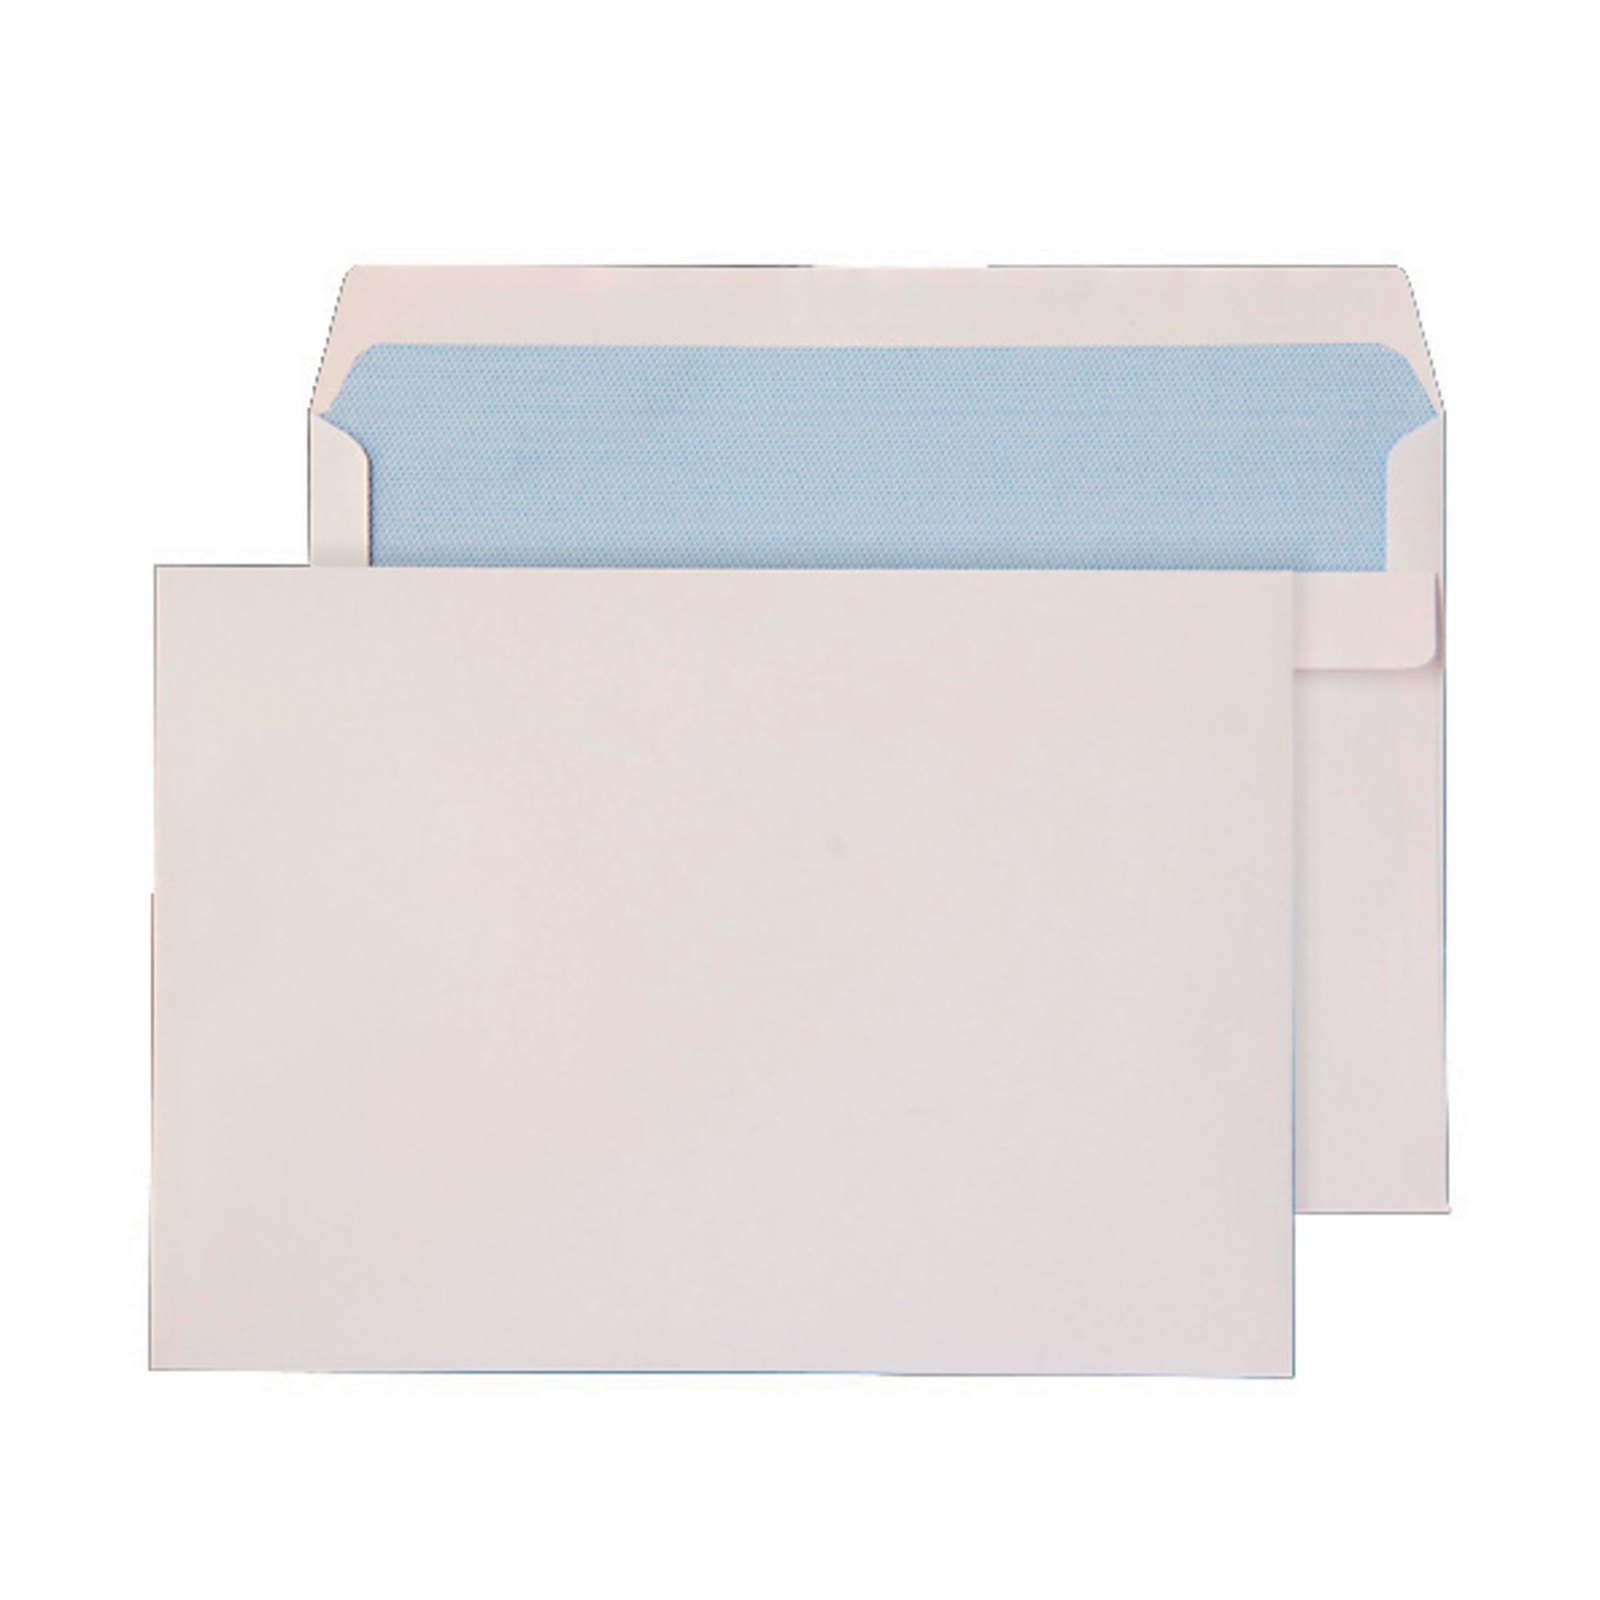 C5 White Self Seal Wallet Envelopes - Box of 500